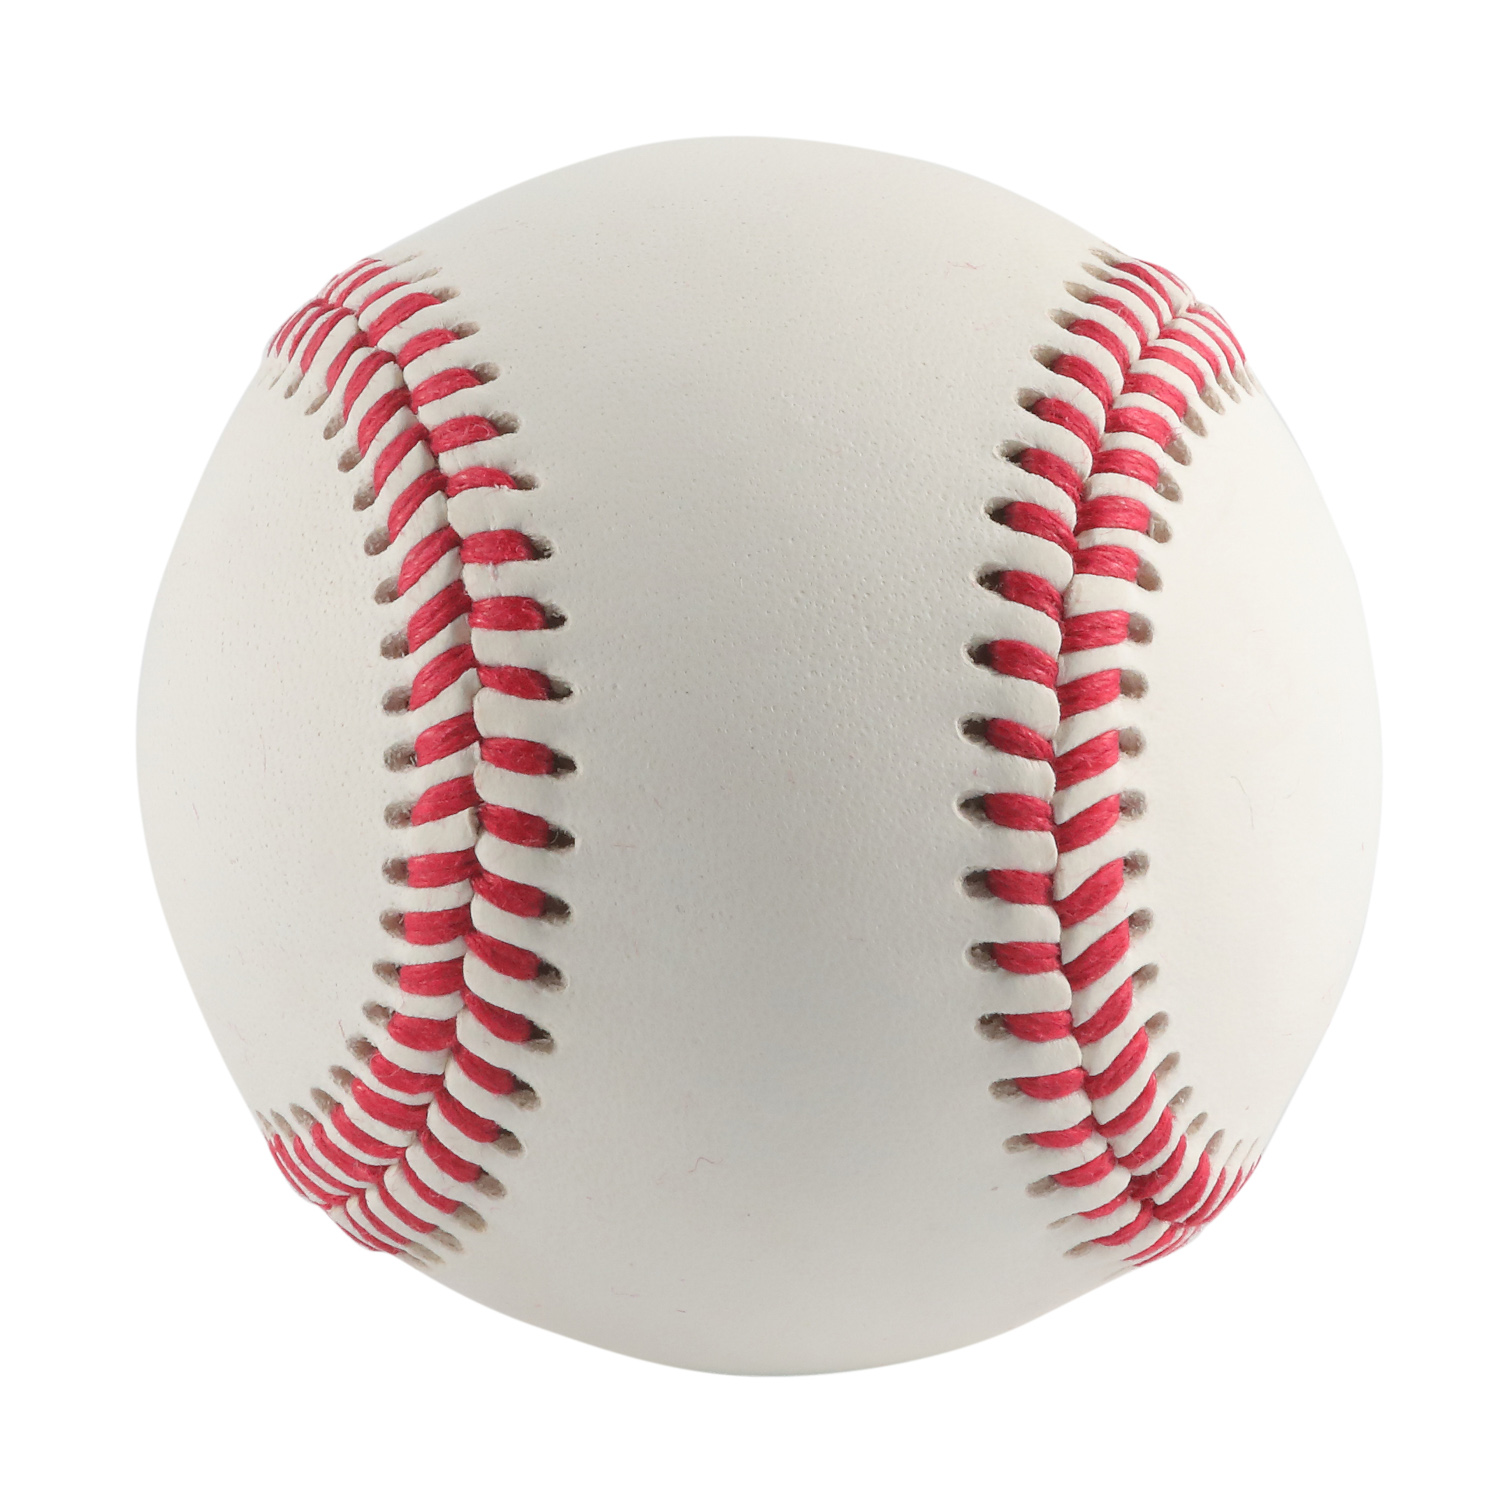 Hochwertiger roter Baseball mit gepolstertem Kern